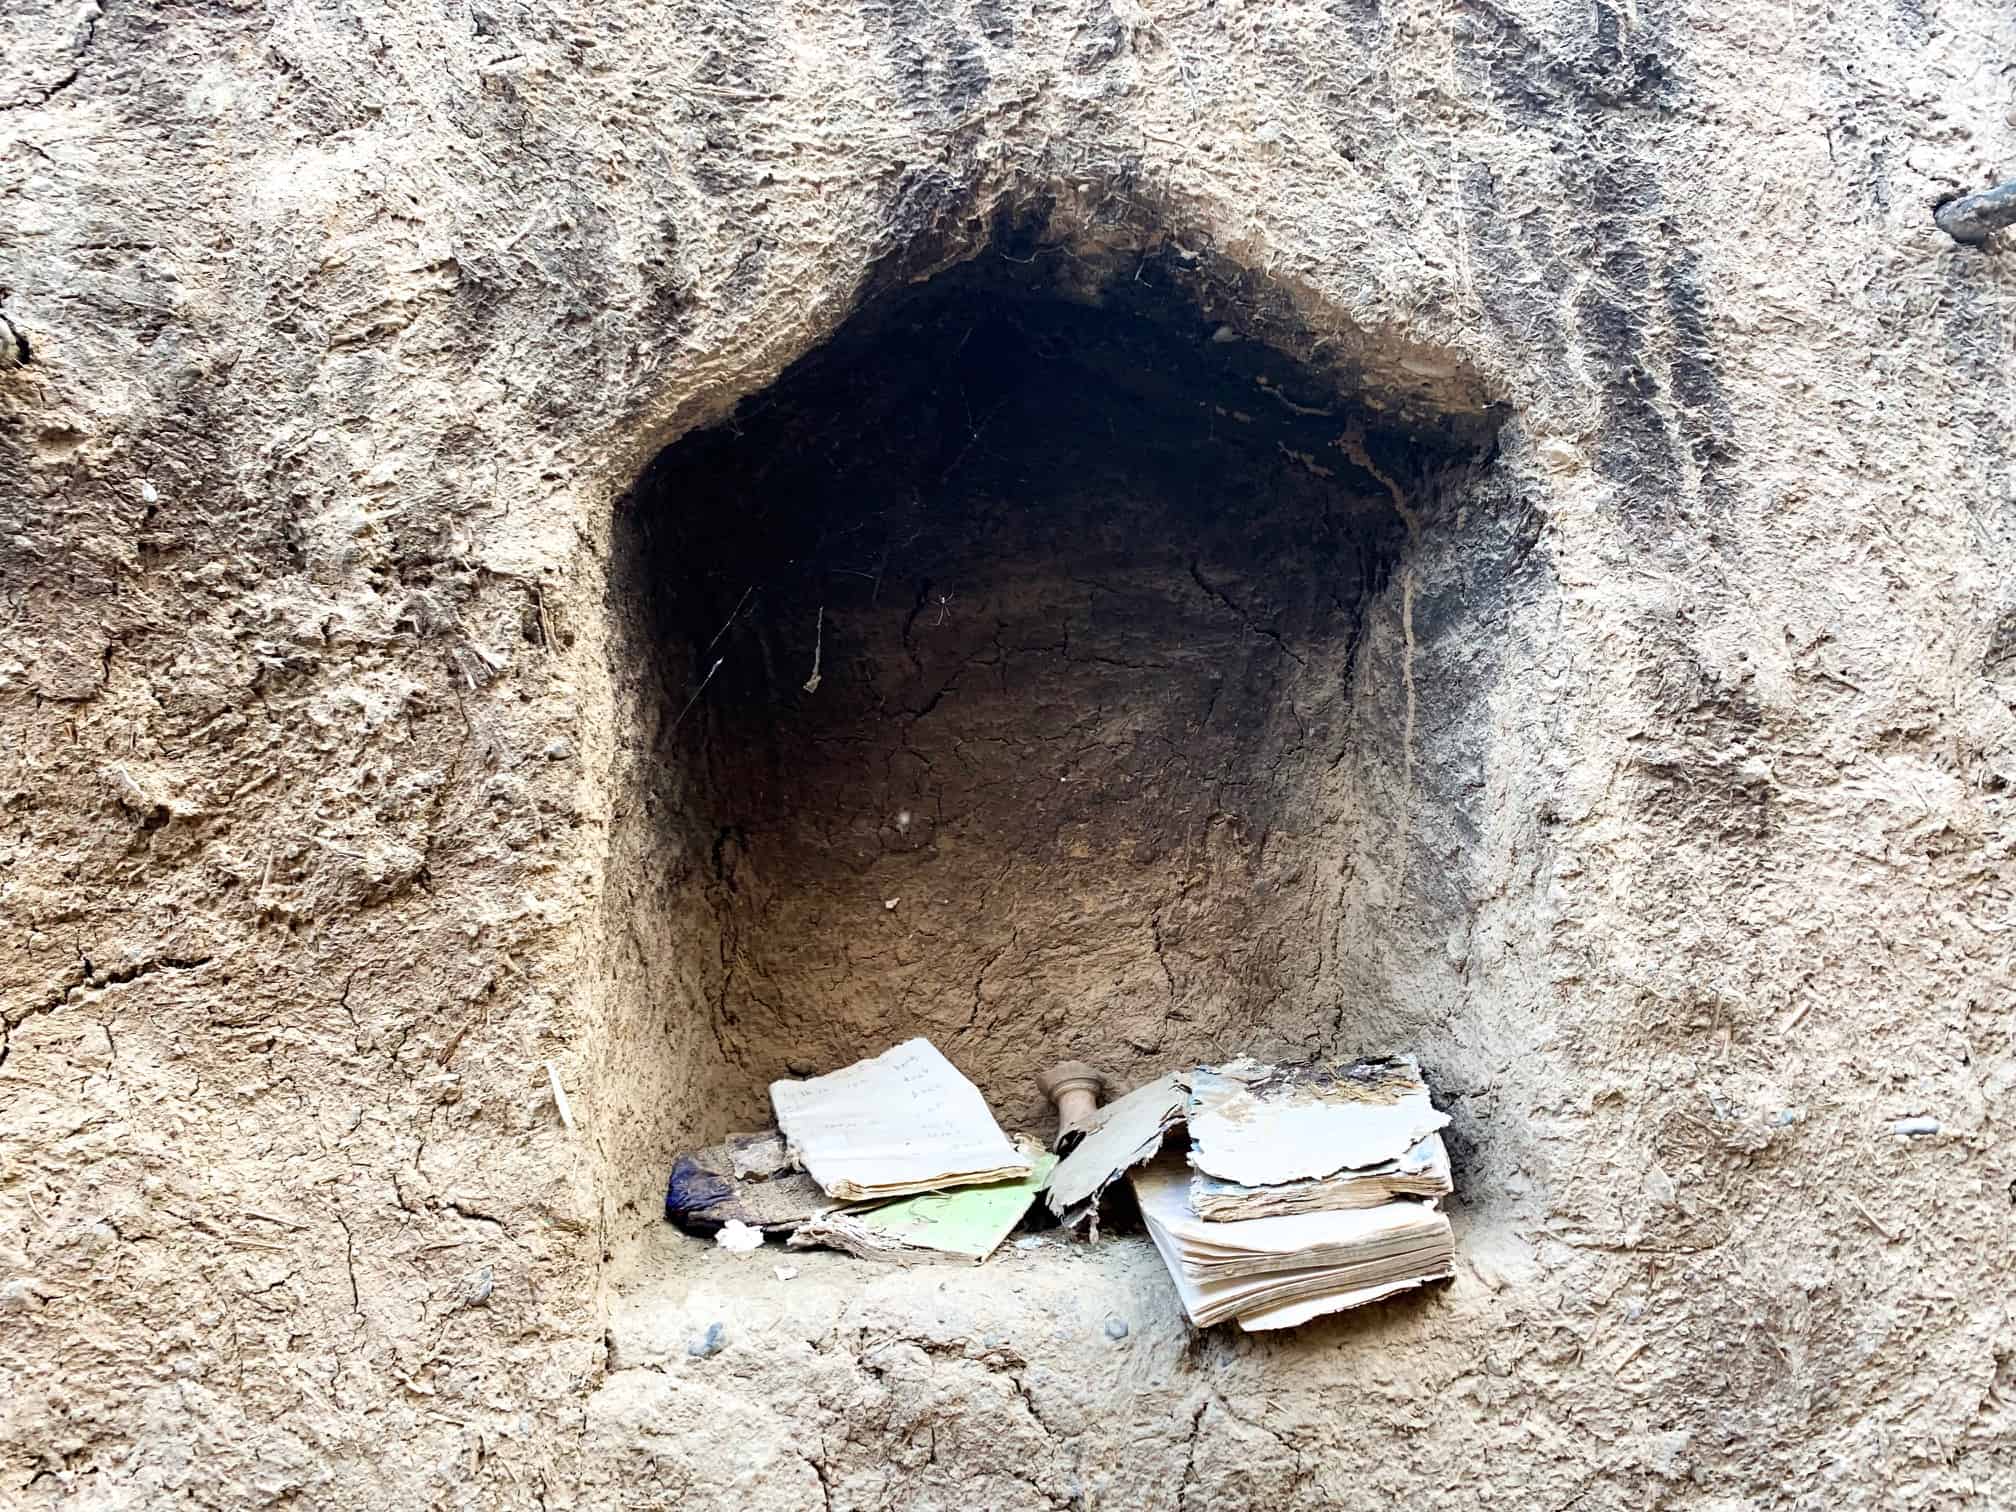 Books at Al Hamra ruins in Oman